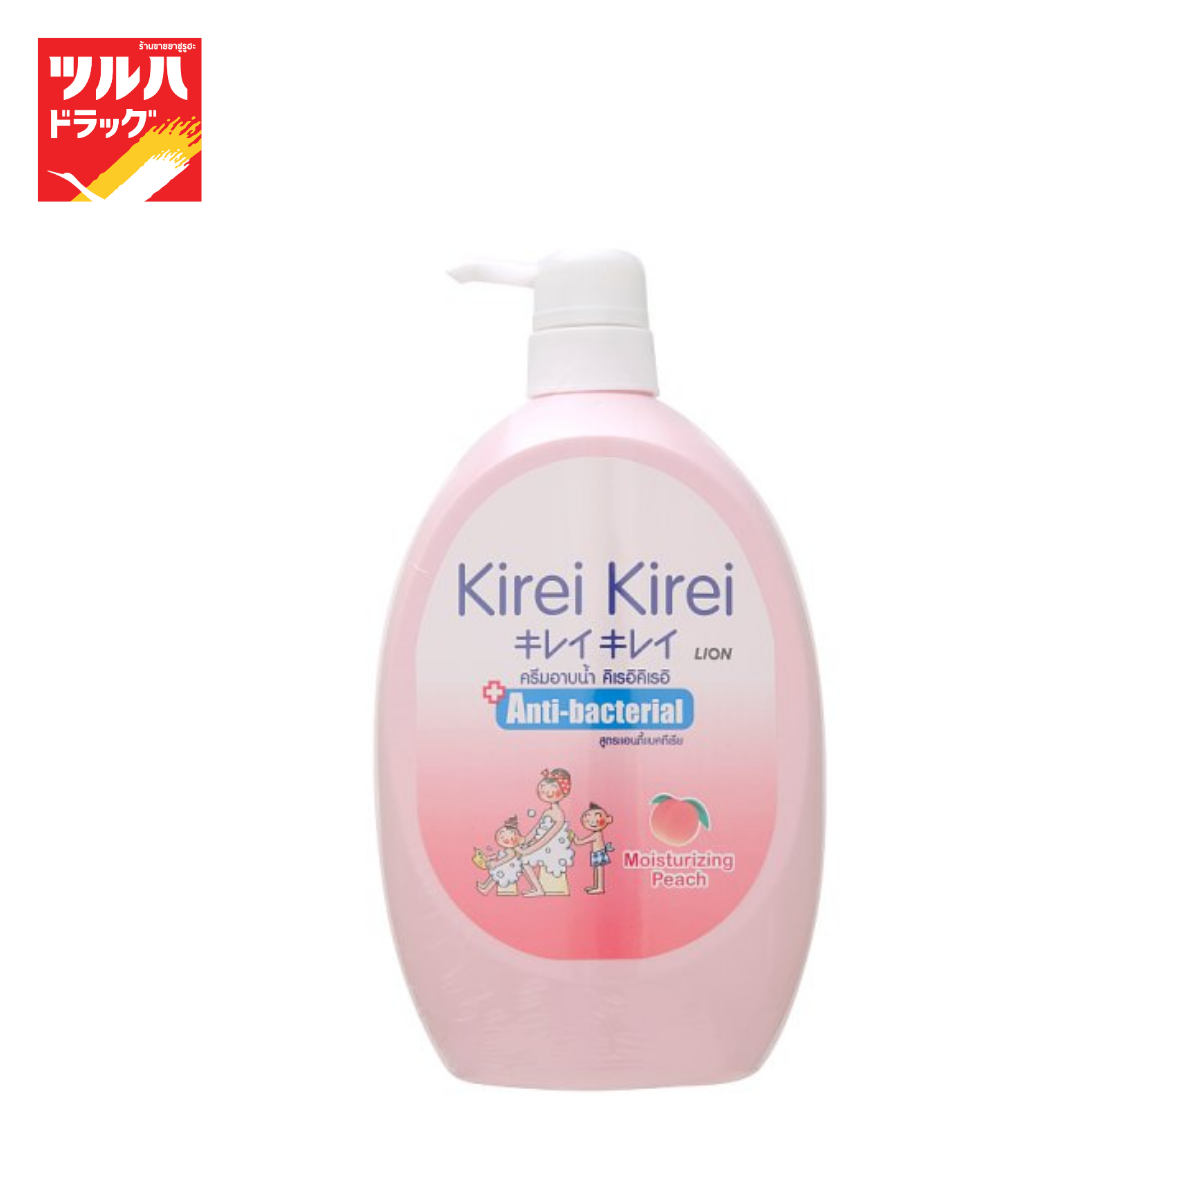 Kirei Kirei Anti-Bacterial Body Foam - Moisturizing Peach / คิเรอิ บอดี้โฟม มอยส์เจอร์ไรซิ่ง พีช 900 มล.